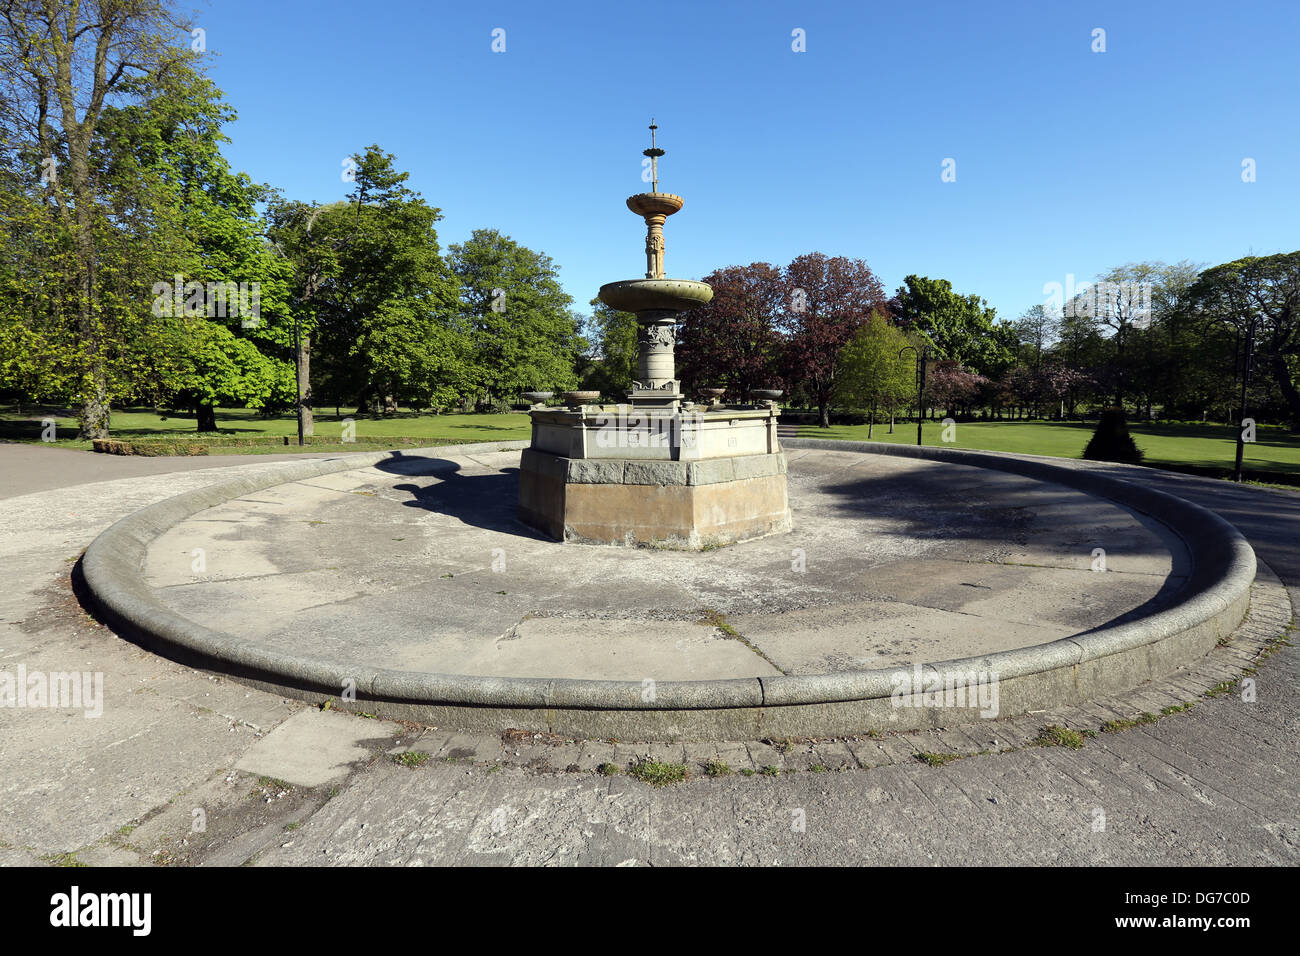 Victoria public park in Aberdeen, Scotland, UK Stock Photo